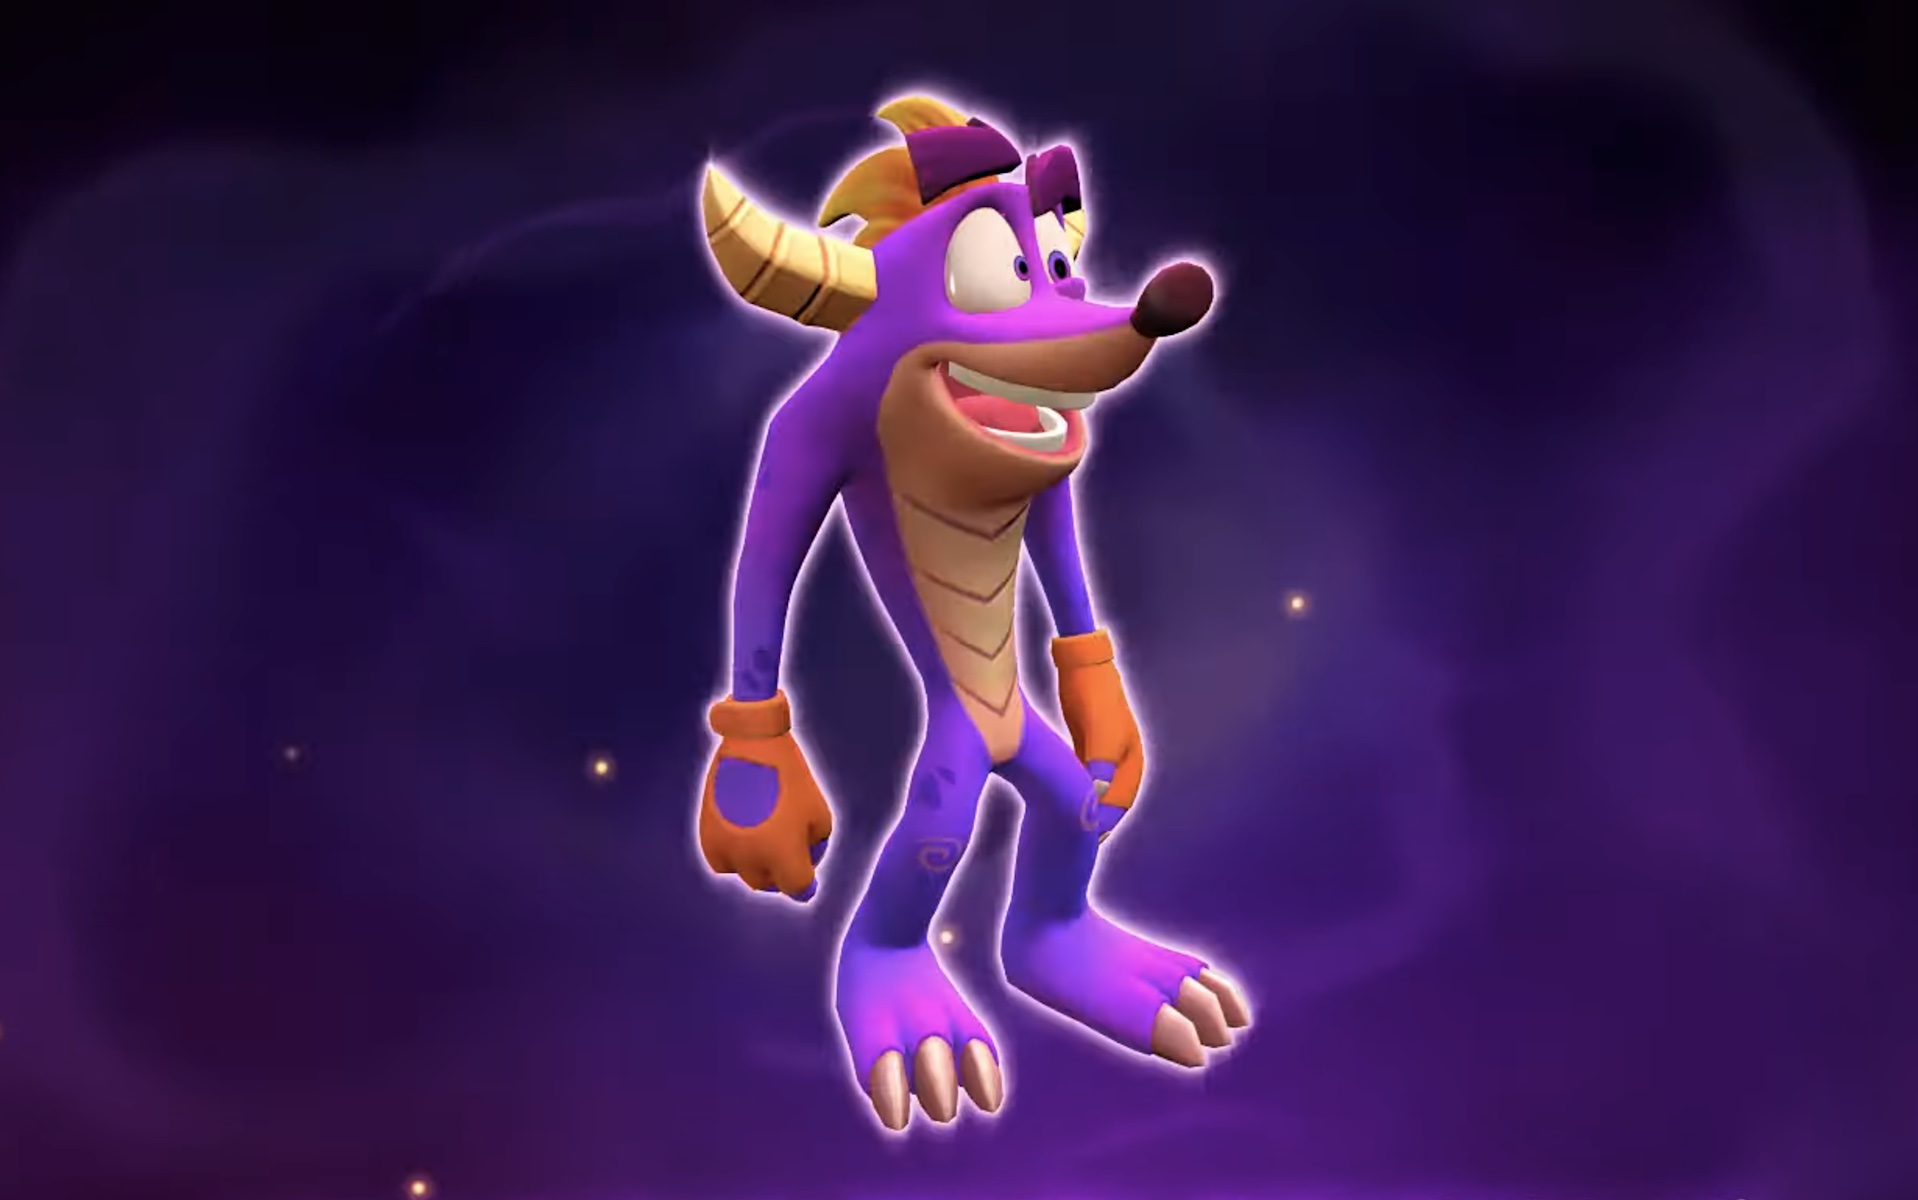 Why is Crash Bandicoot’s new Spyro skin so upsetting?